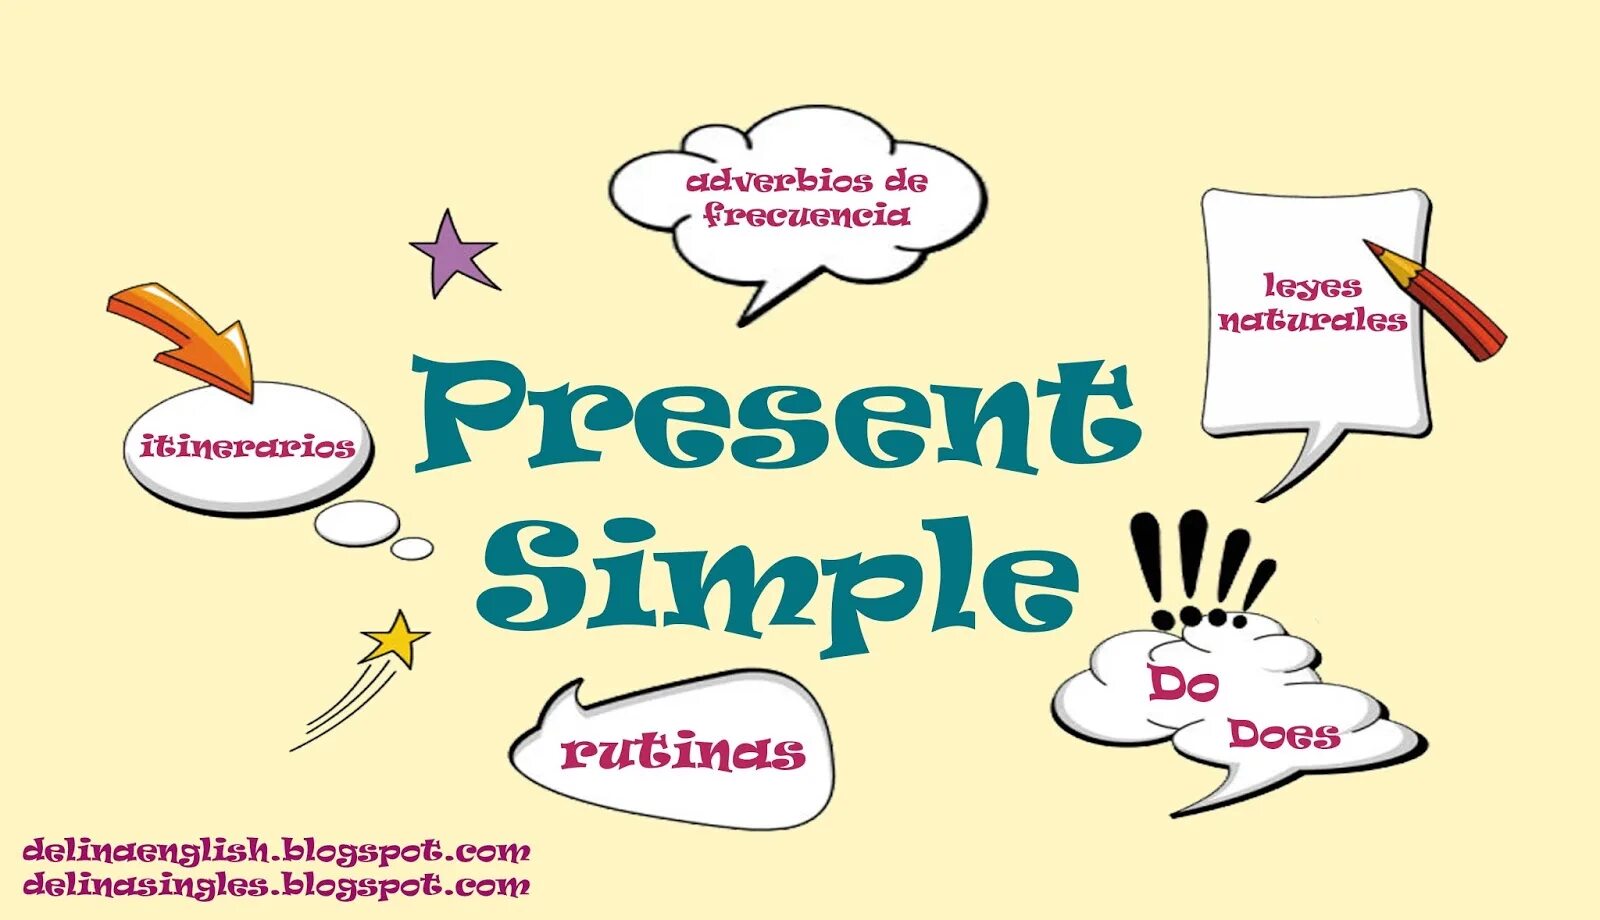 Present simple. Present simple для детей. Present simple картинки. Презент Симпл картинка для детей. Present posting